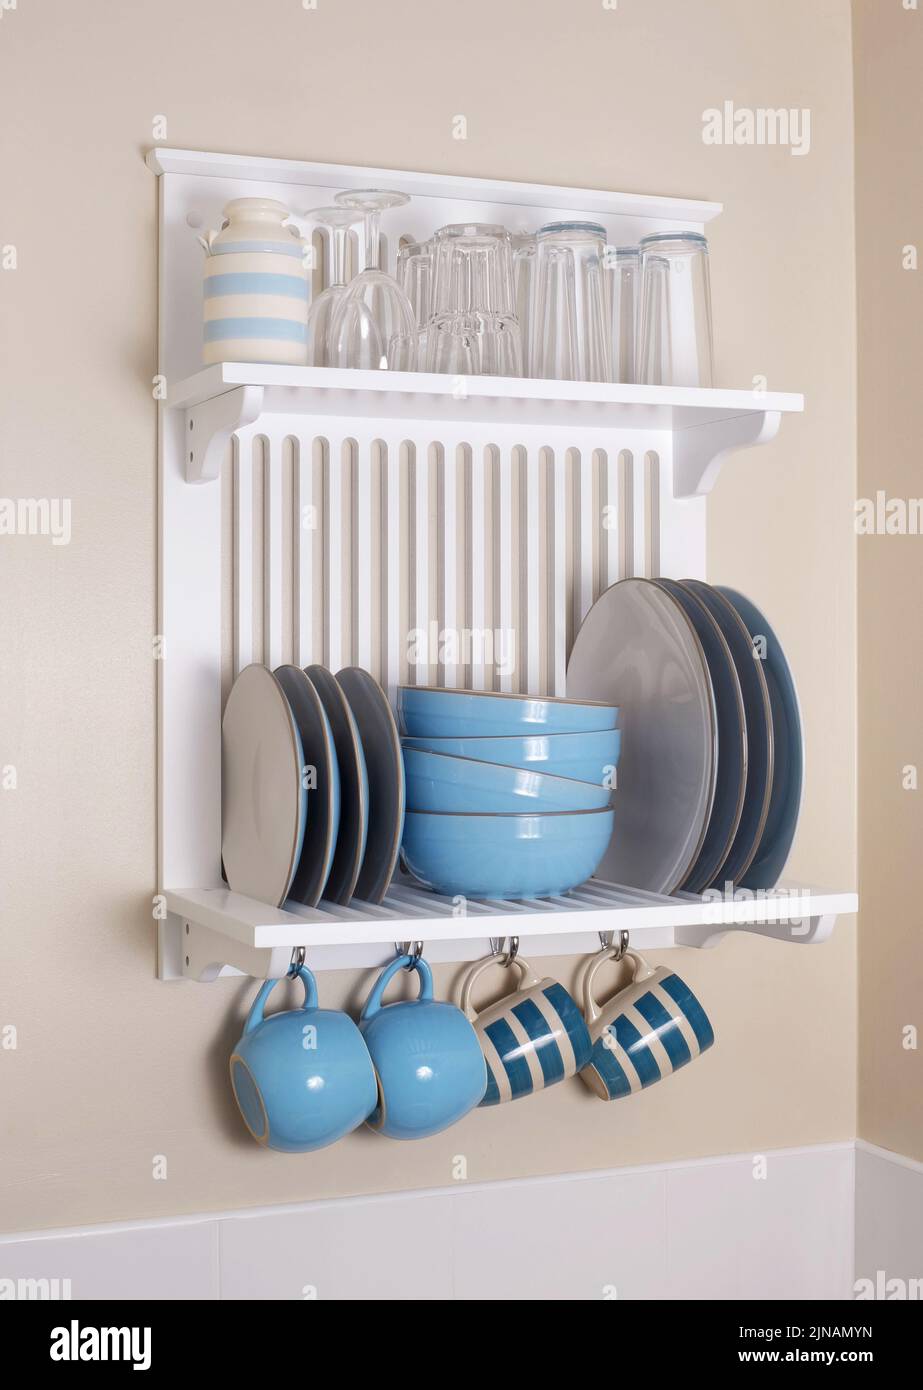 https://c8.alamy.com/comp/2JNAMYN/crockery-plate-rack-and-shelves-wall-mounted-on-kitchen-wall-2JNAMYN.jpg